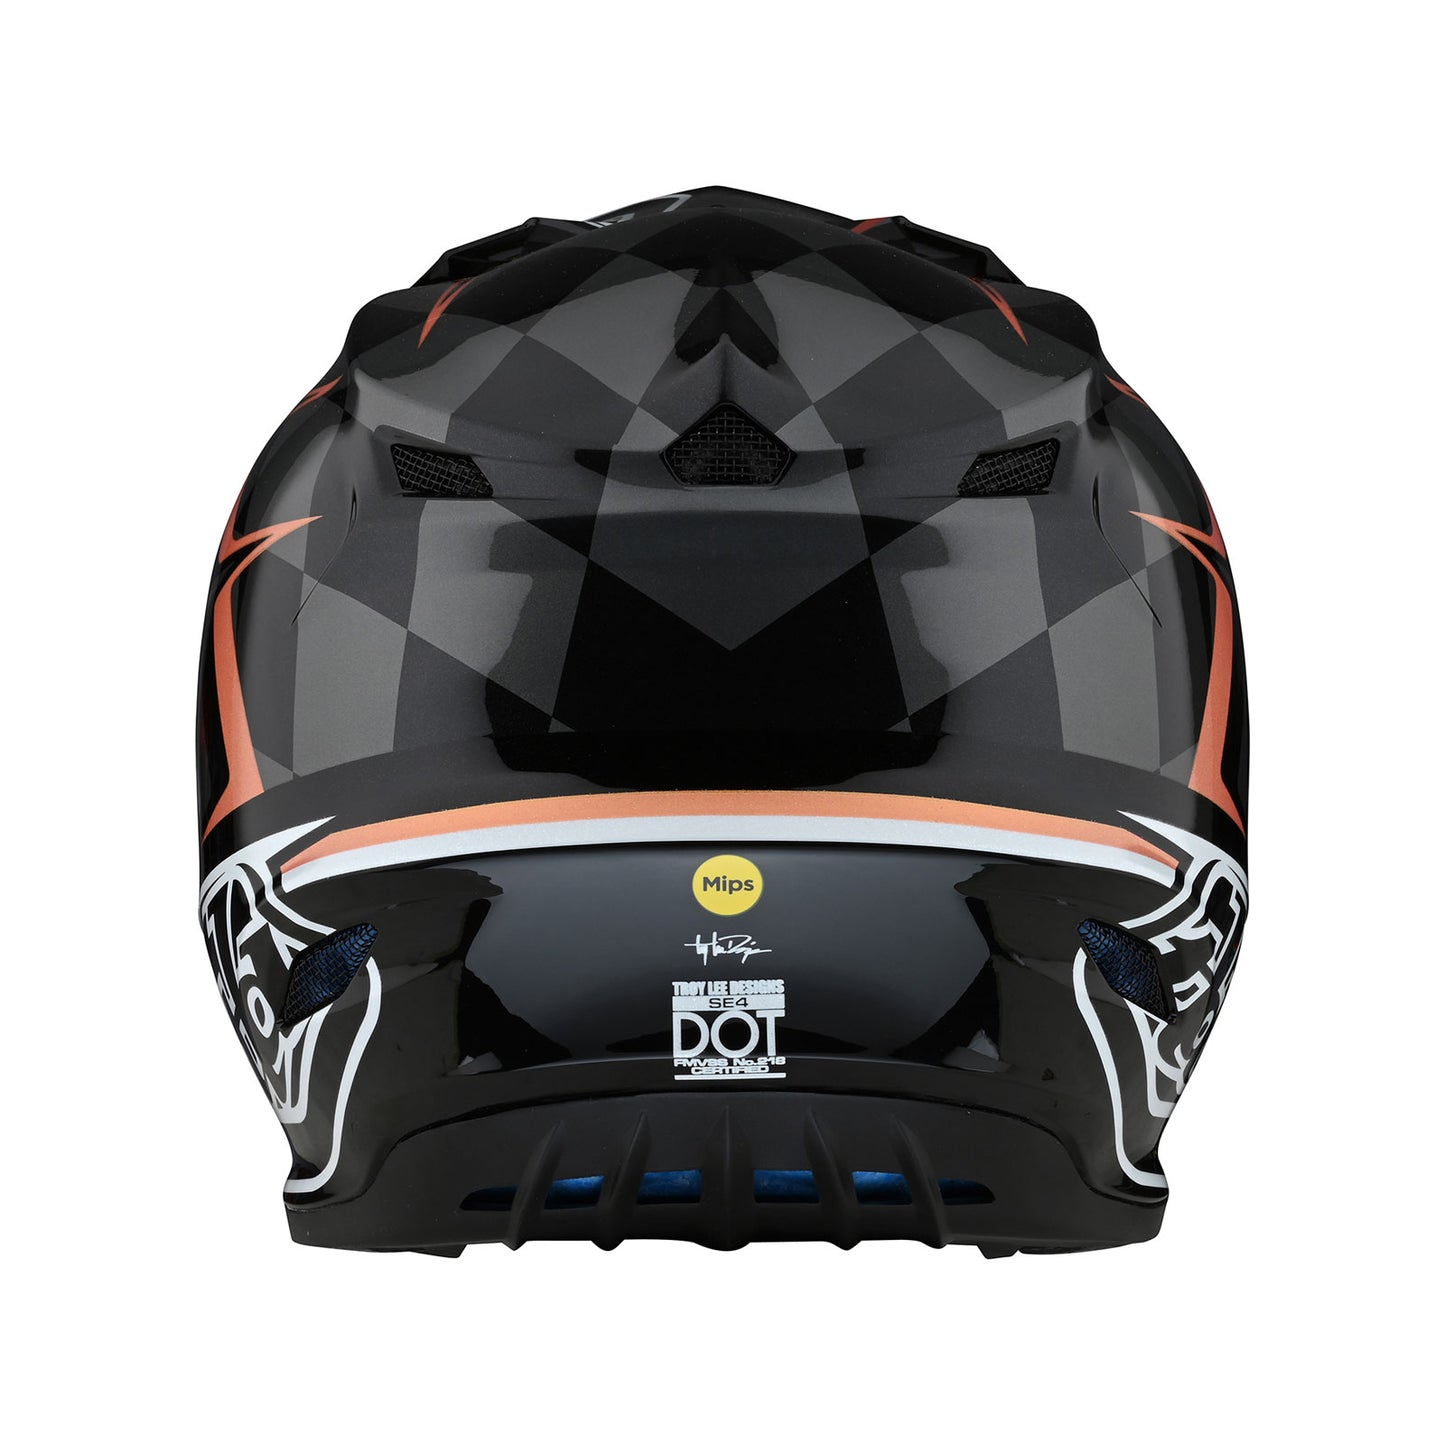 SE4 Polyacrylite Helmet Warped Black / Copper